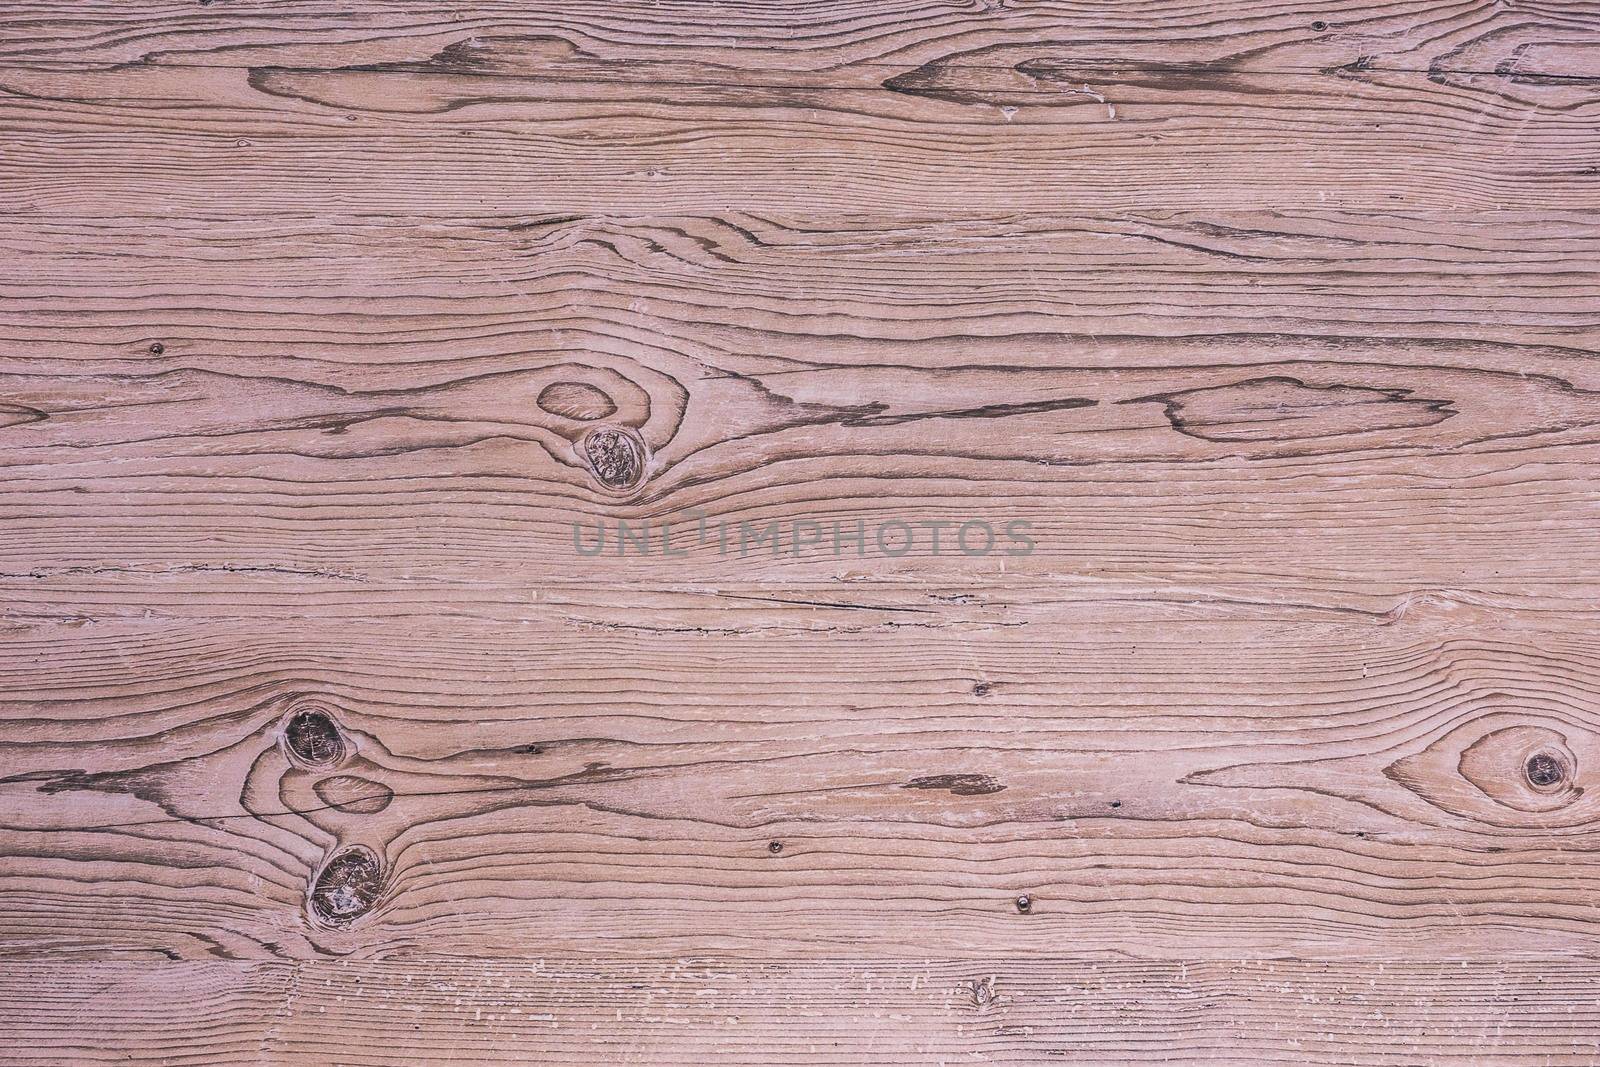 Vintage wooden floor detail background with filtered effect